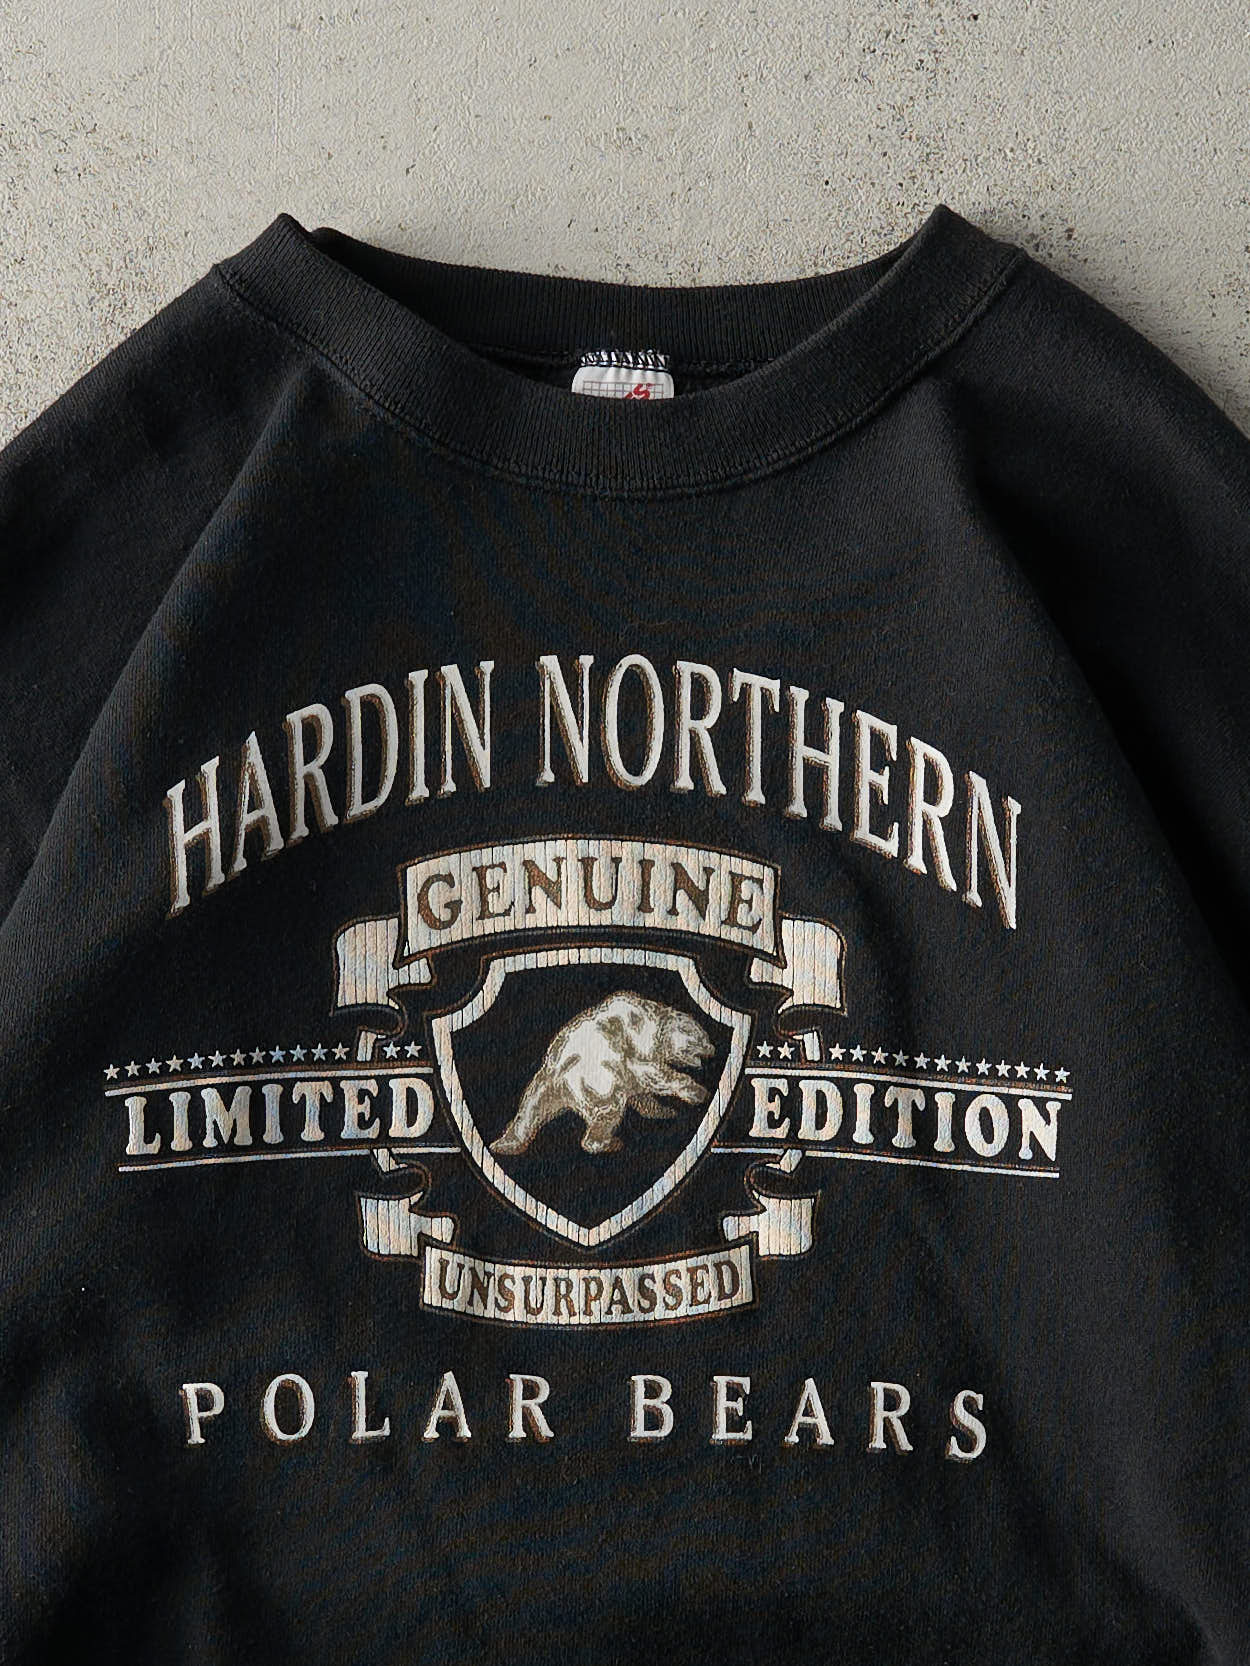 Vintage 90s Black Hardin Northern Polar Bears Crewneck (L)